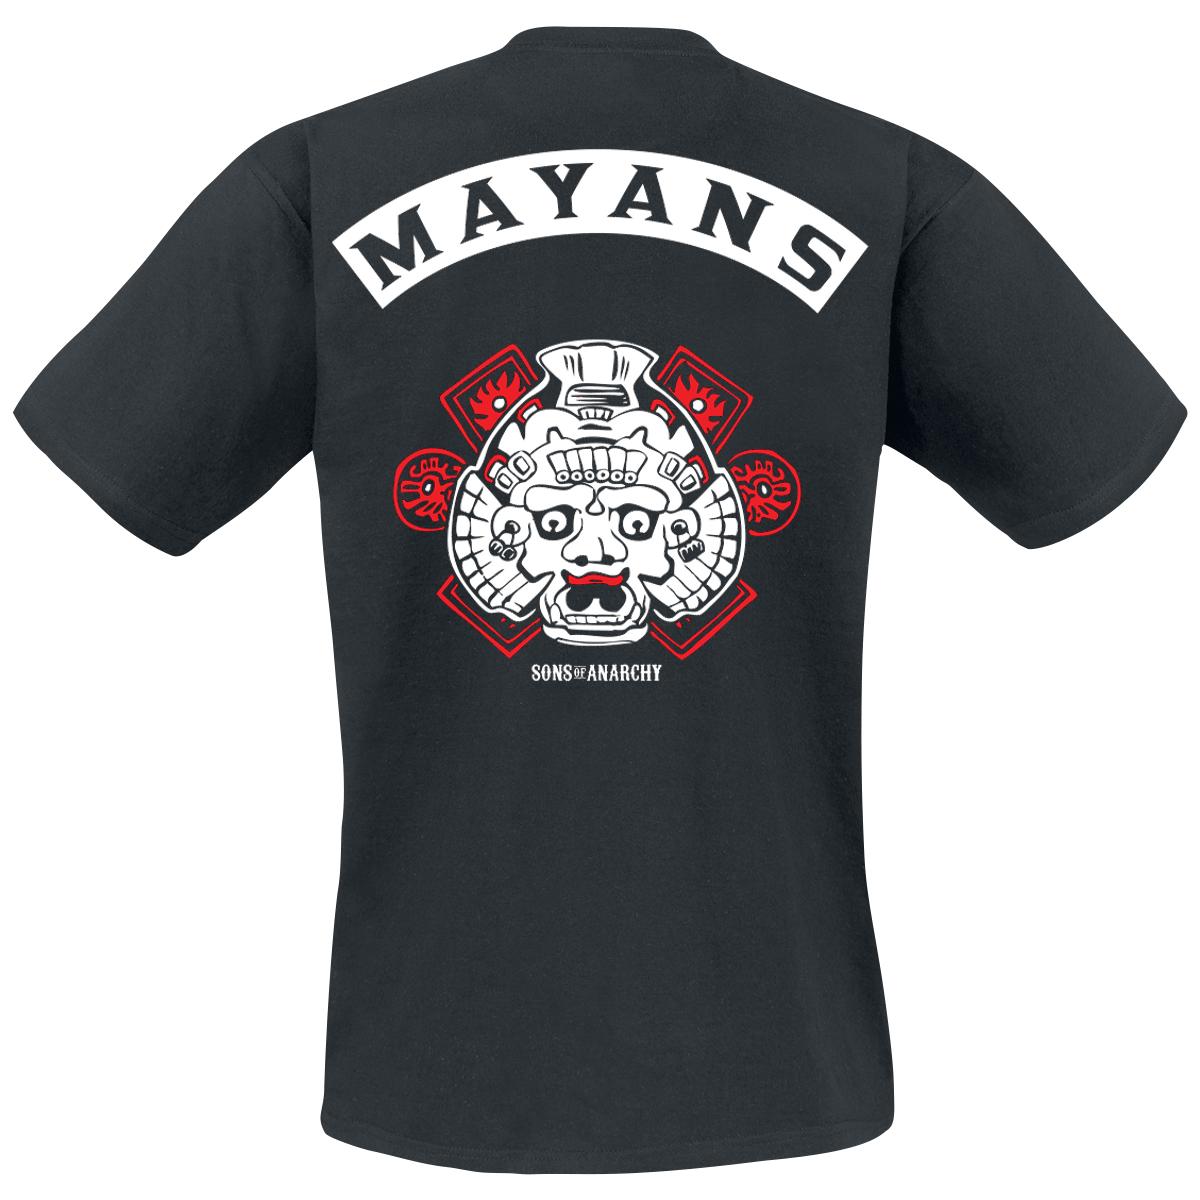 Los Mayans T-shirt Design back